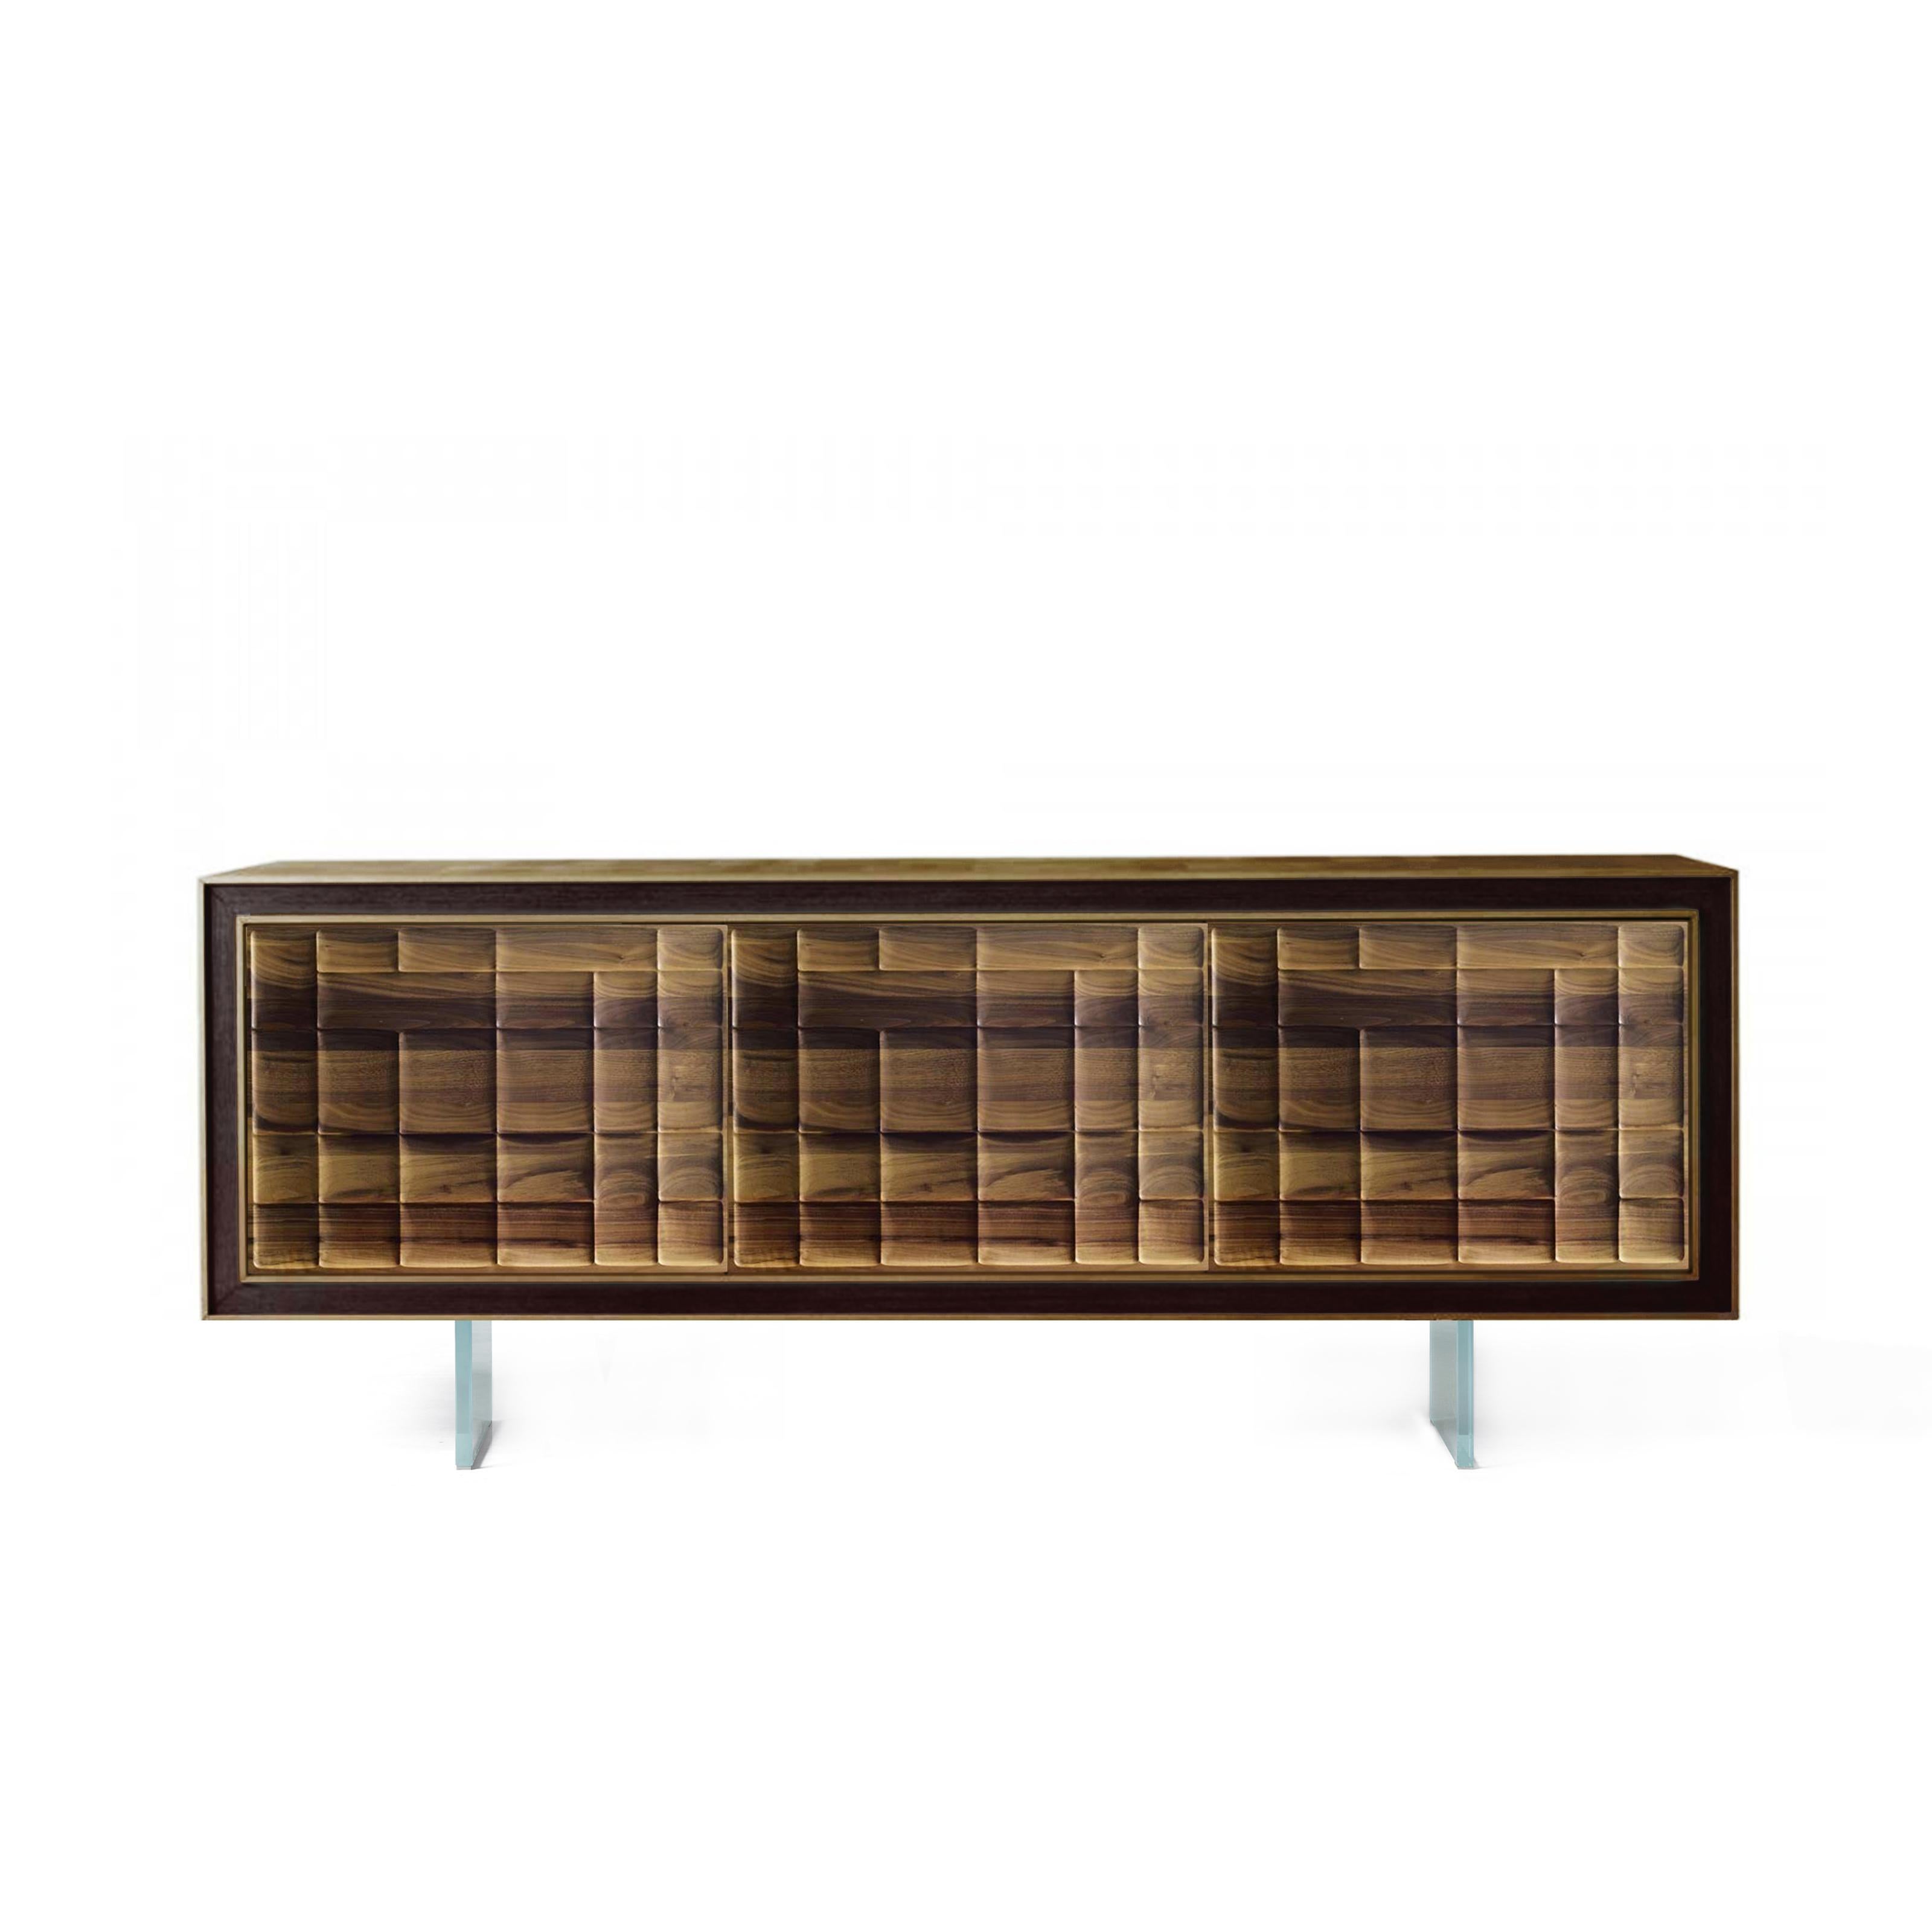 Quadra Scacco Solid Wood Sideboard, Walnut in Natural Finish, Contemporary In New Condition For Sale In Cadeglioppi de Oppeano, VR